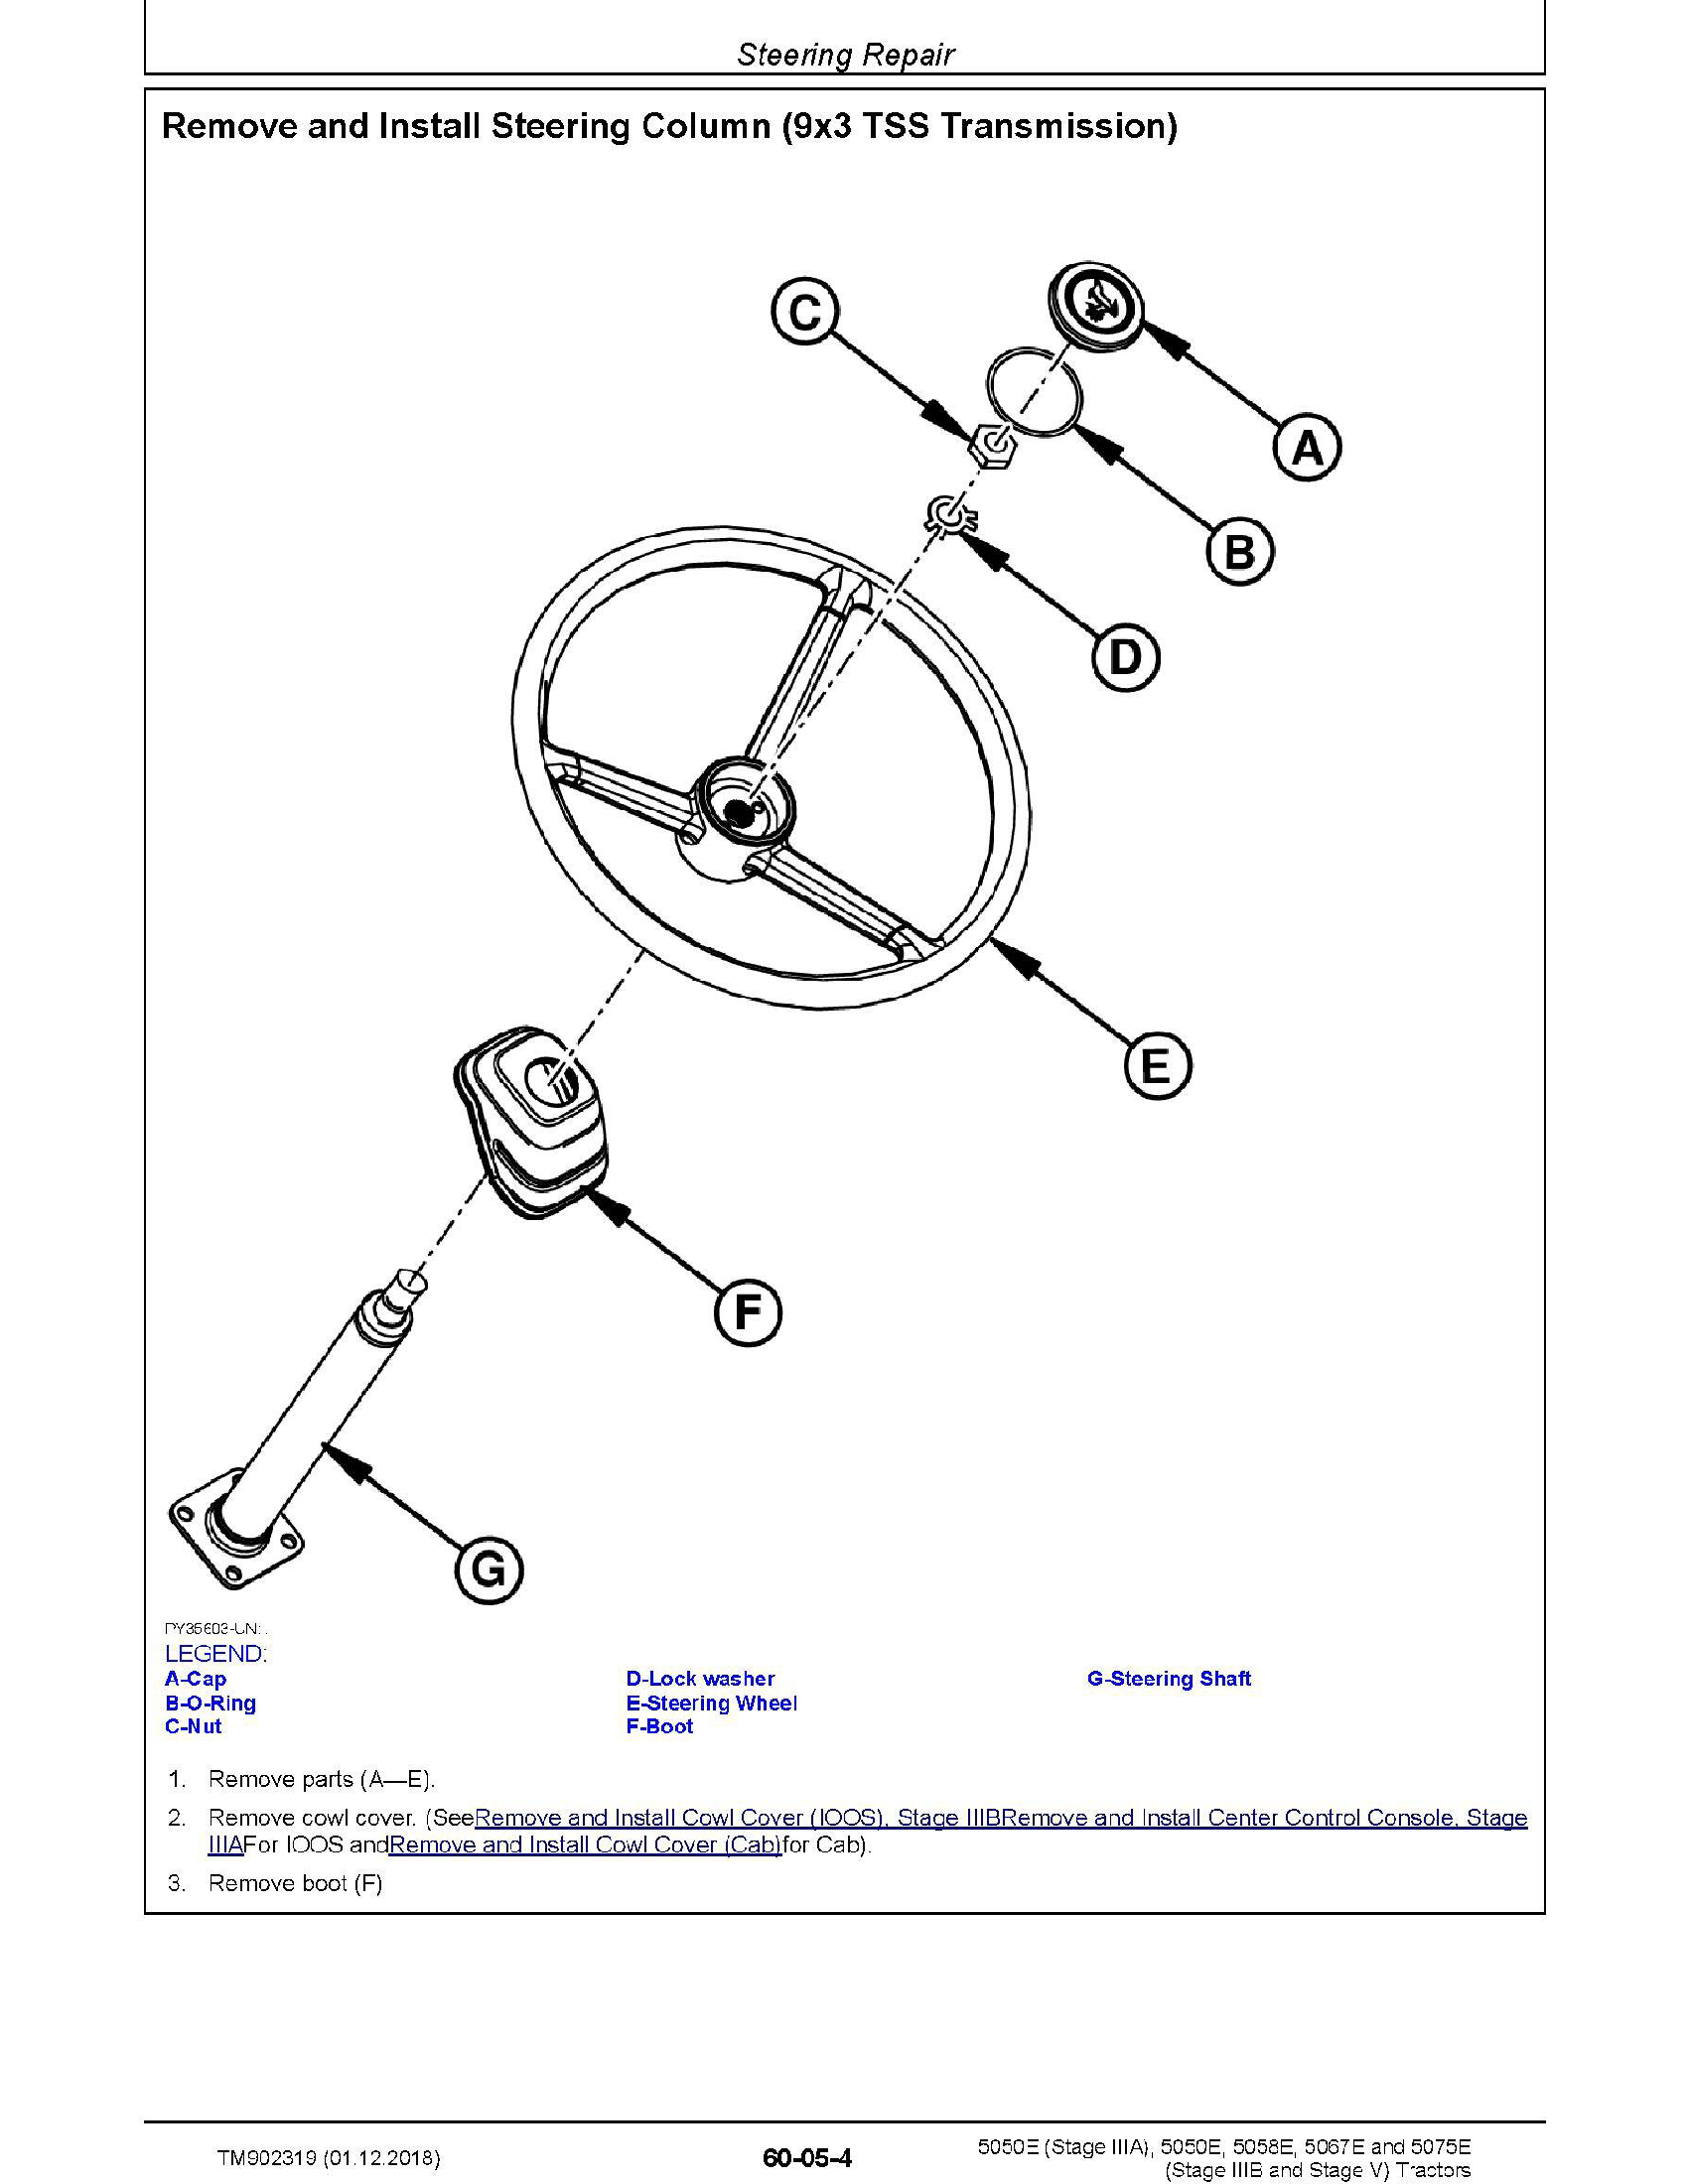 John Deere 300D manual pdf